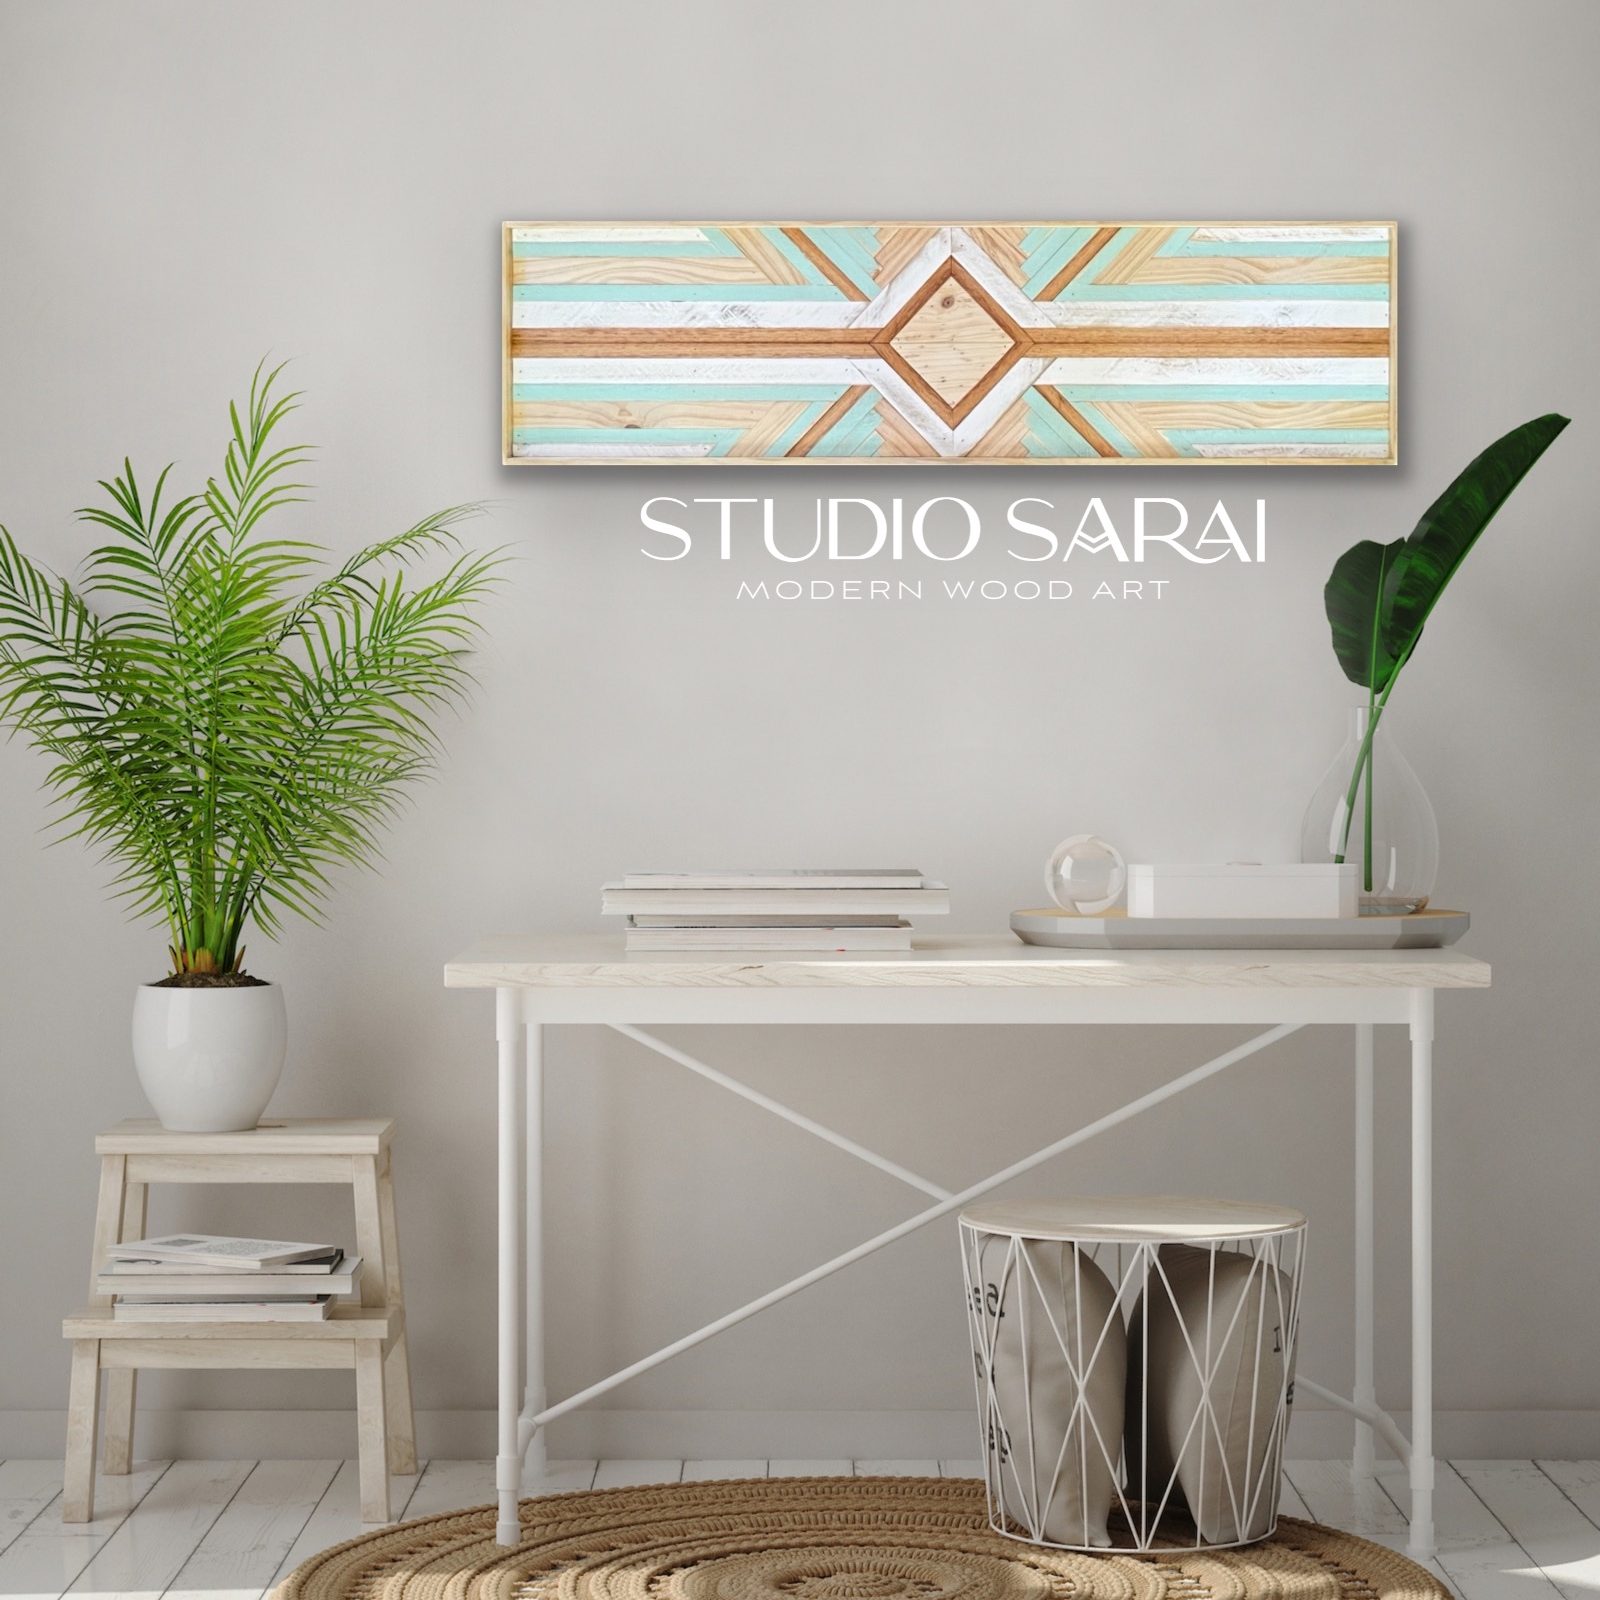 Buy Wood Slice Mosaic Online at Studio Sarai